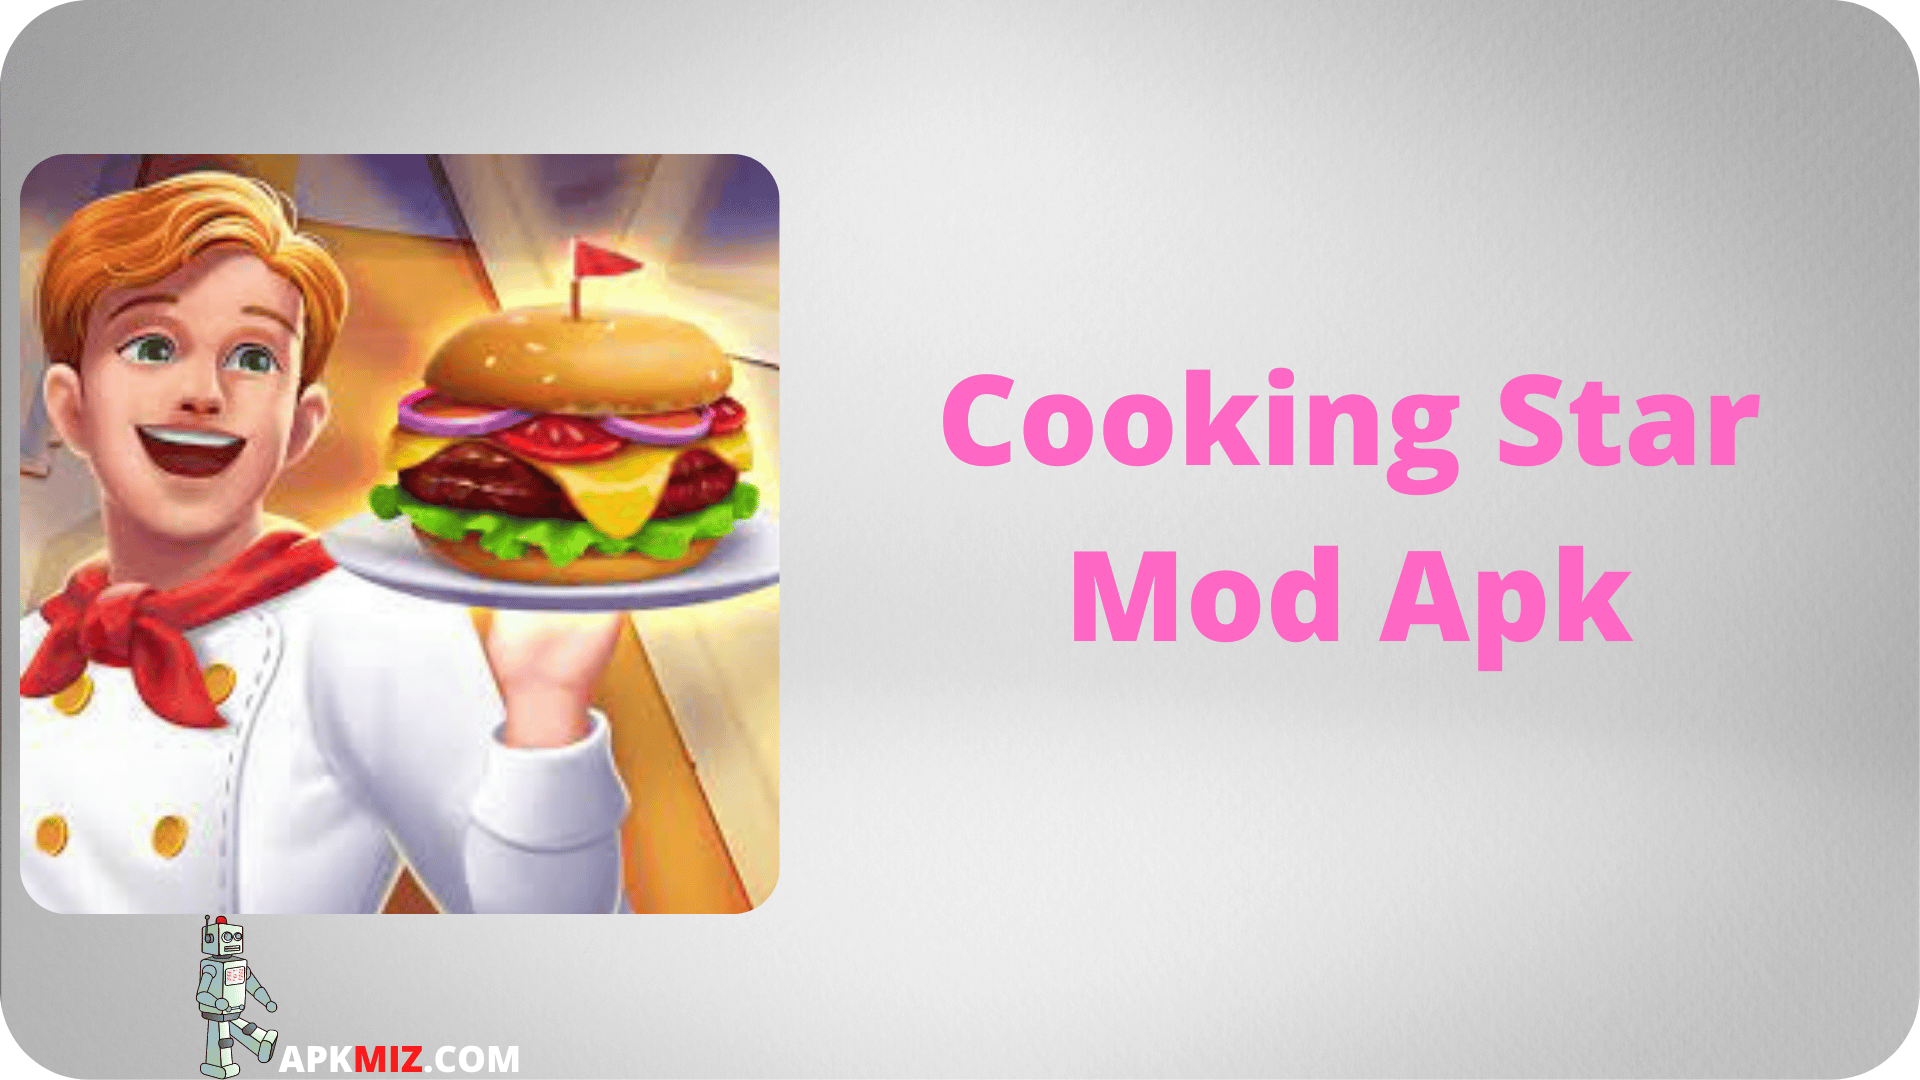 Cooking Star Mod Apk